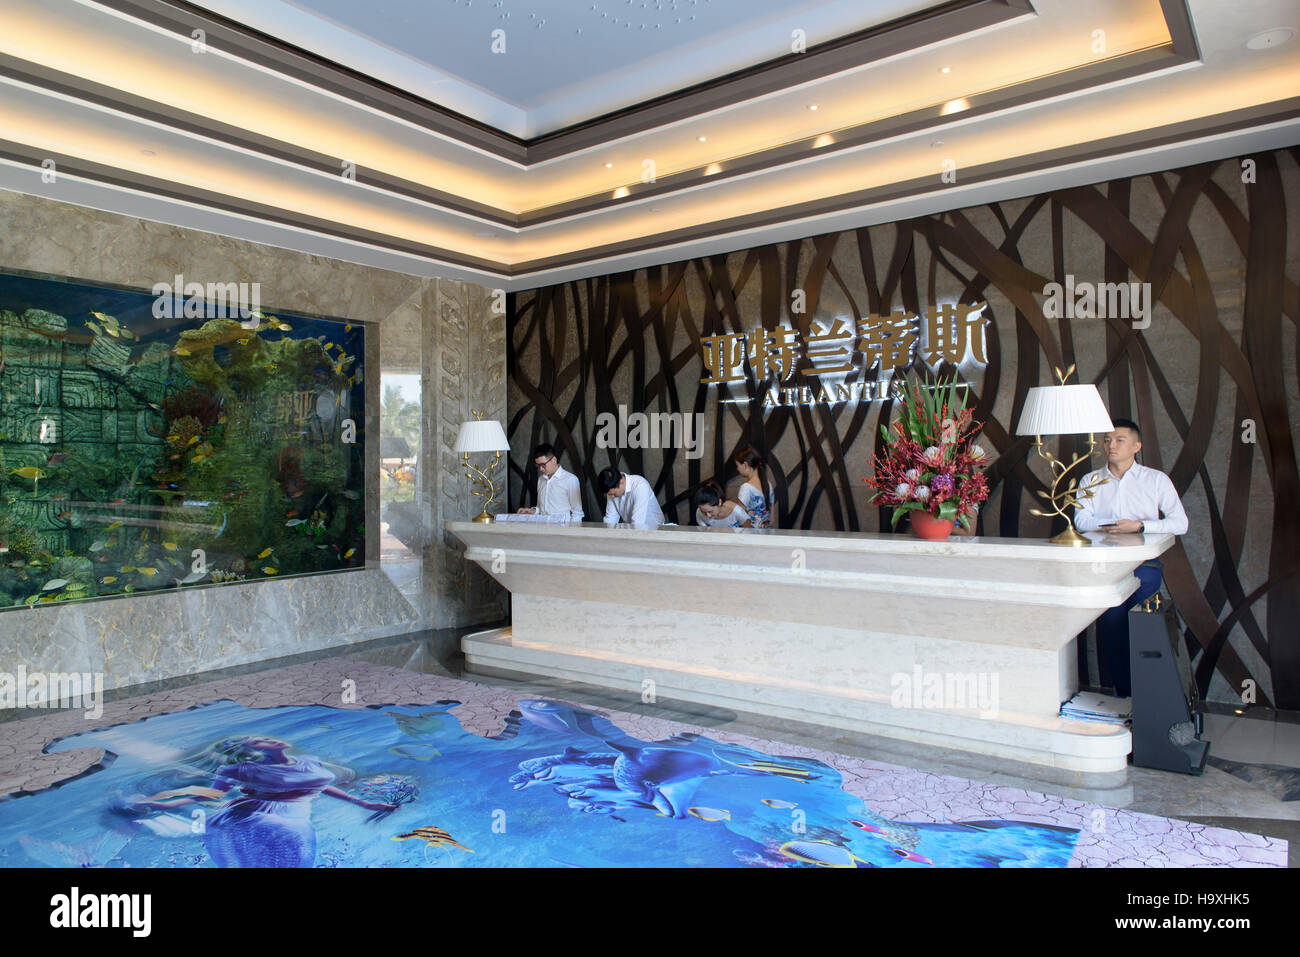 Hotel Atlantis vicino a Sanya Hainan Island, Cina Foto Stock